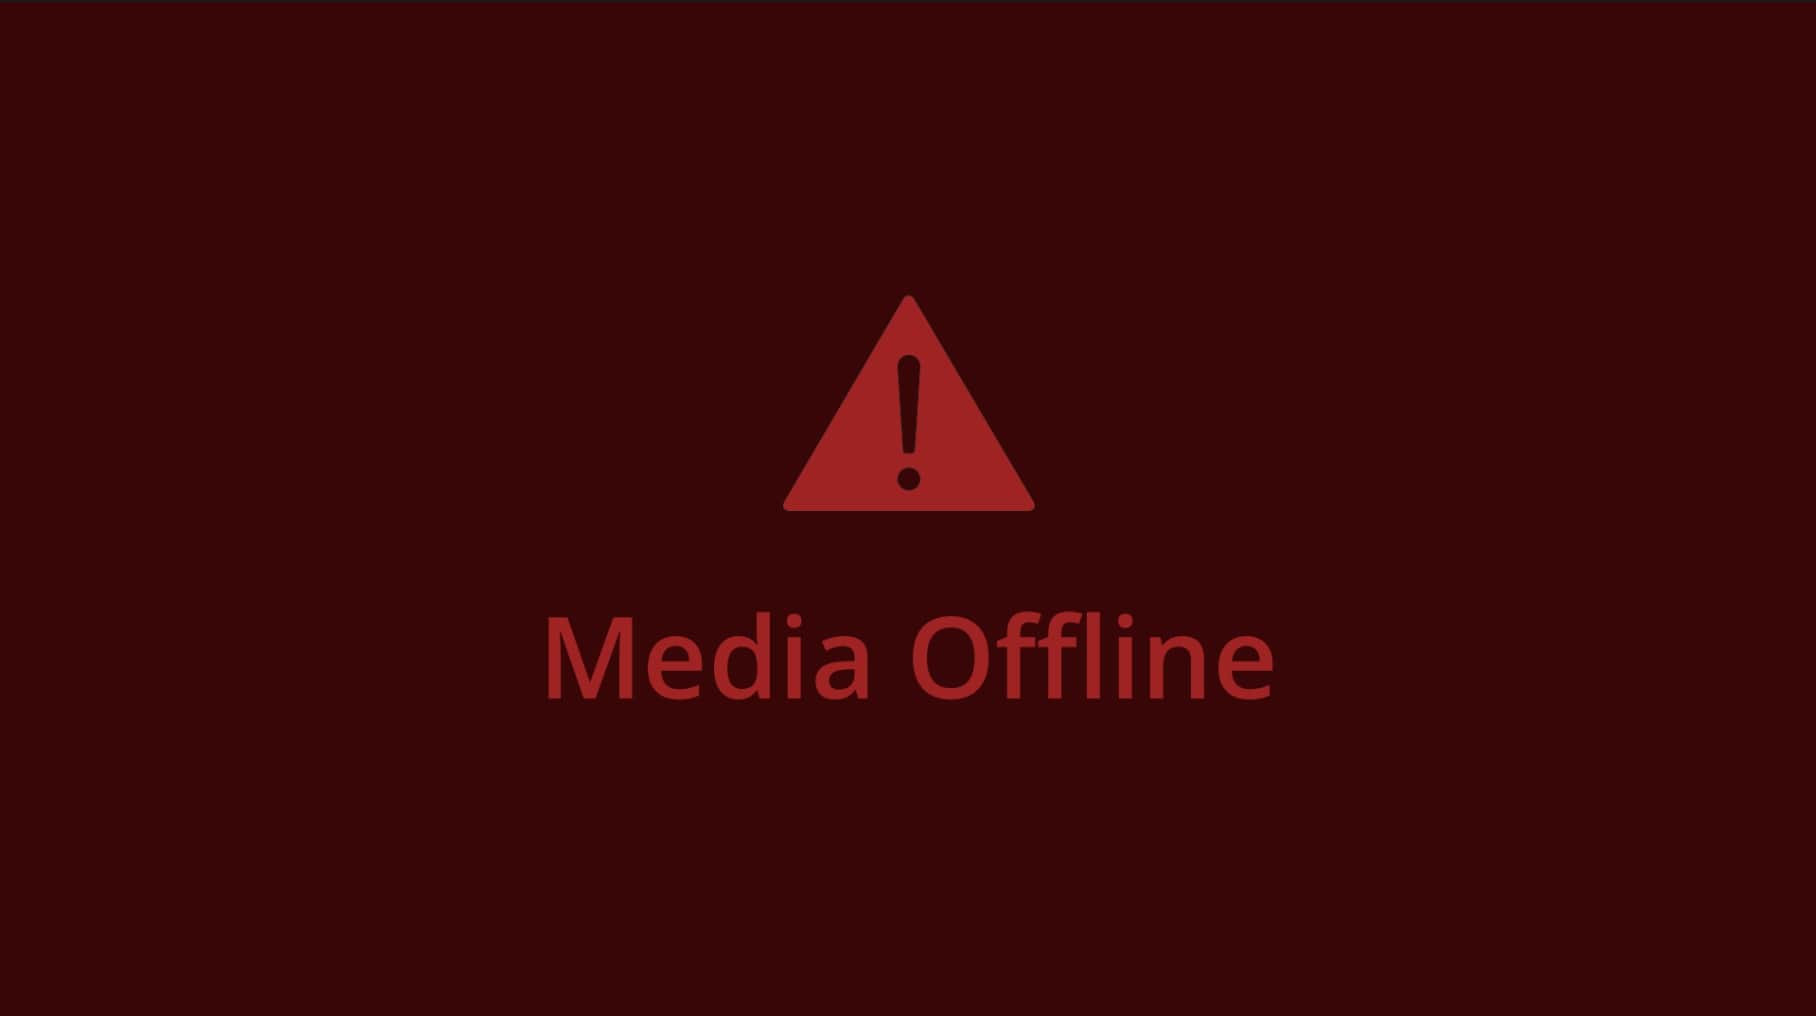 davinci resolve media offline - media offline alert